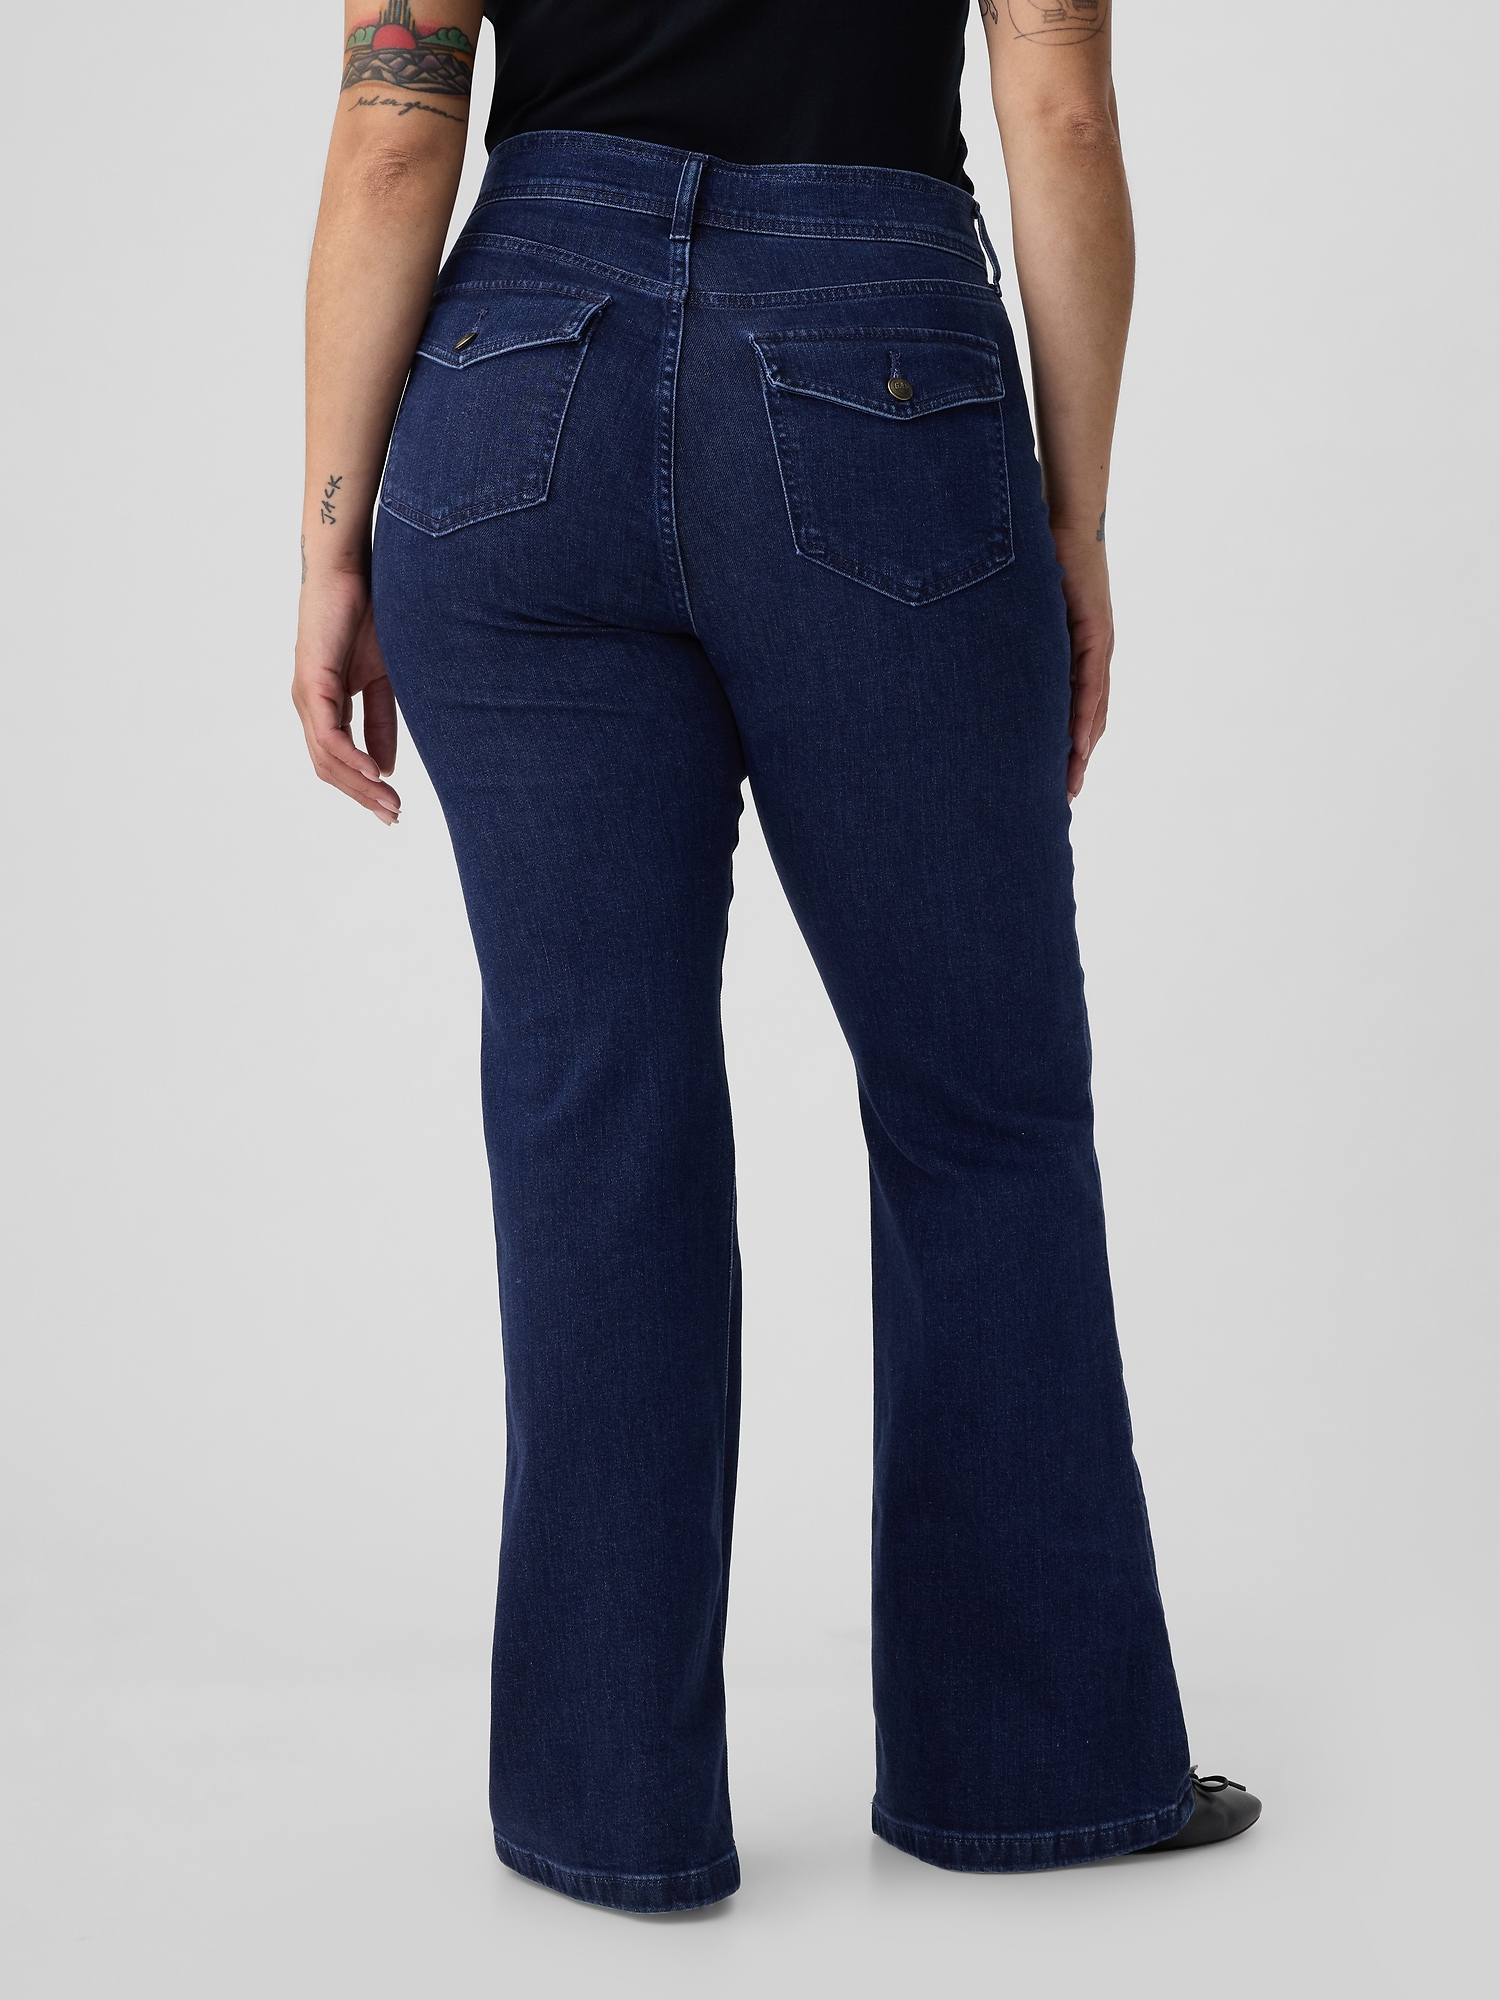 180 Best high waisted jeans ideas